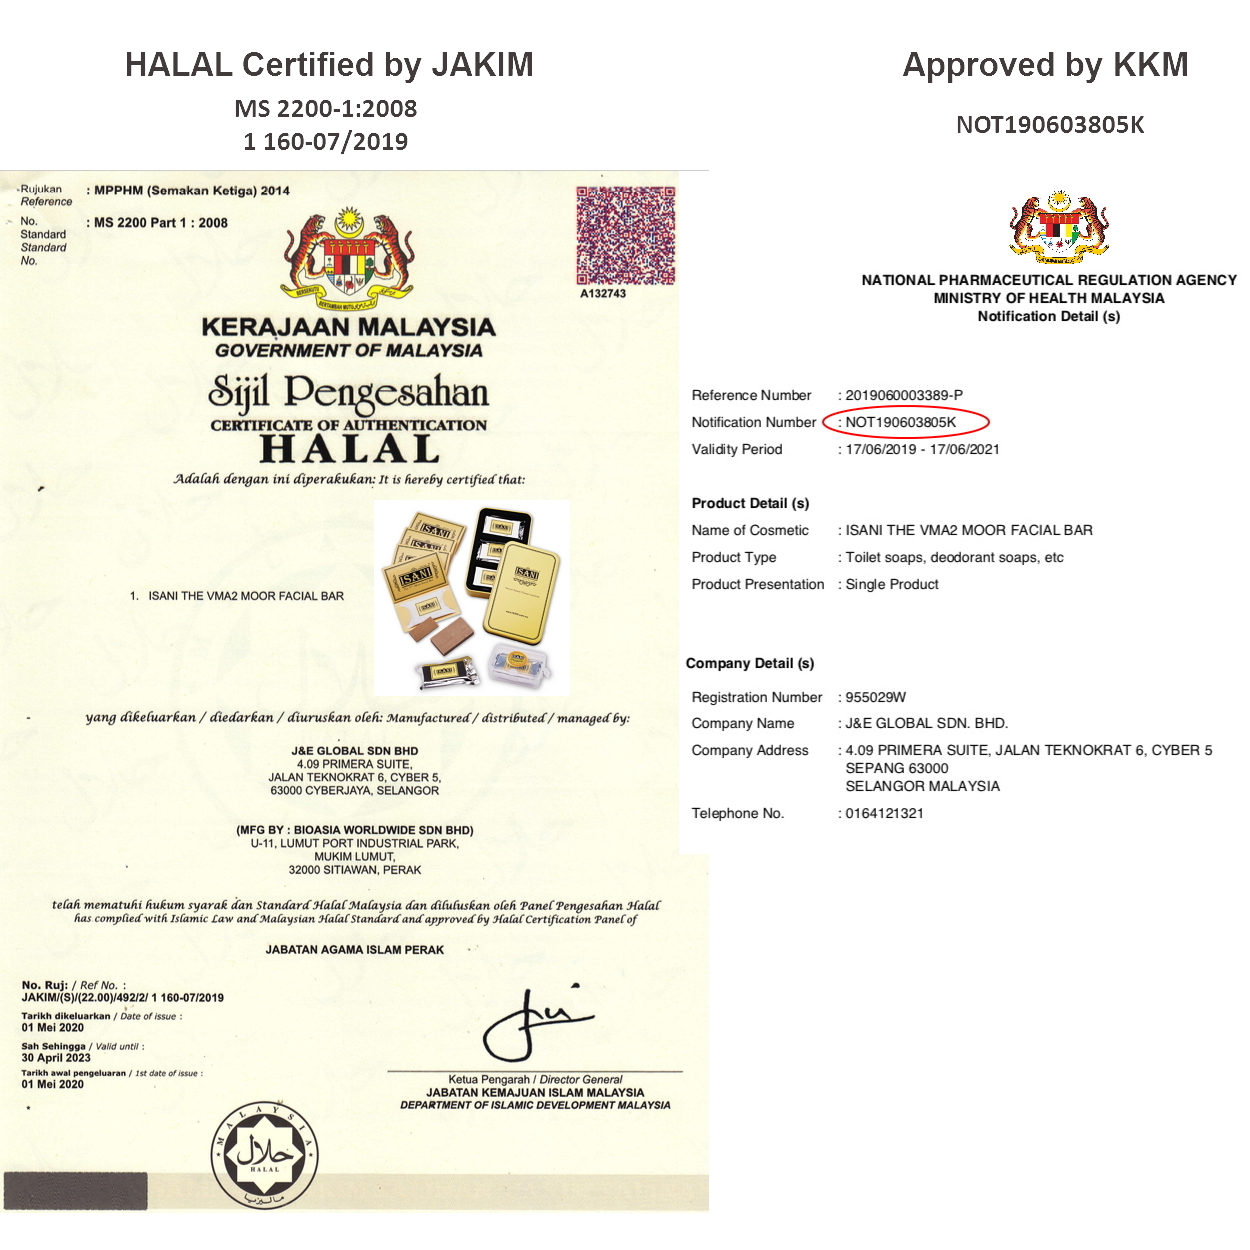 ISANI Halal and KKM certs